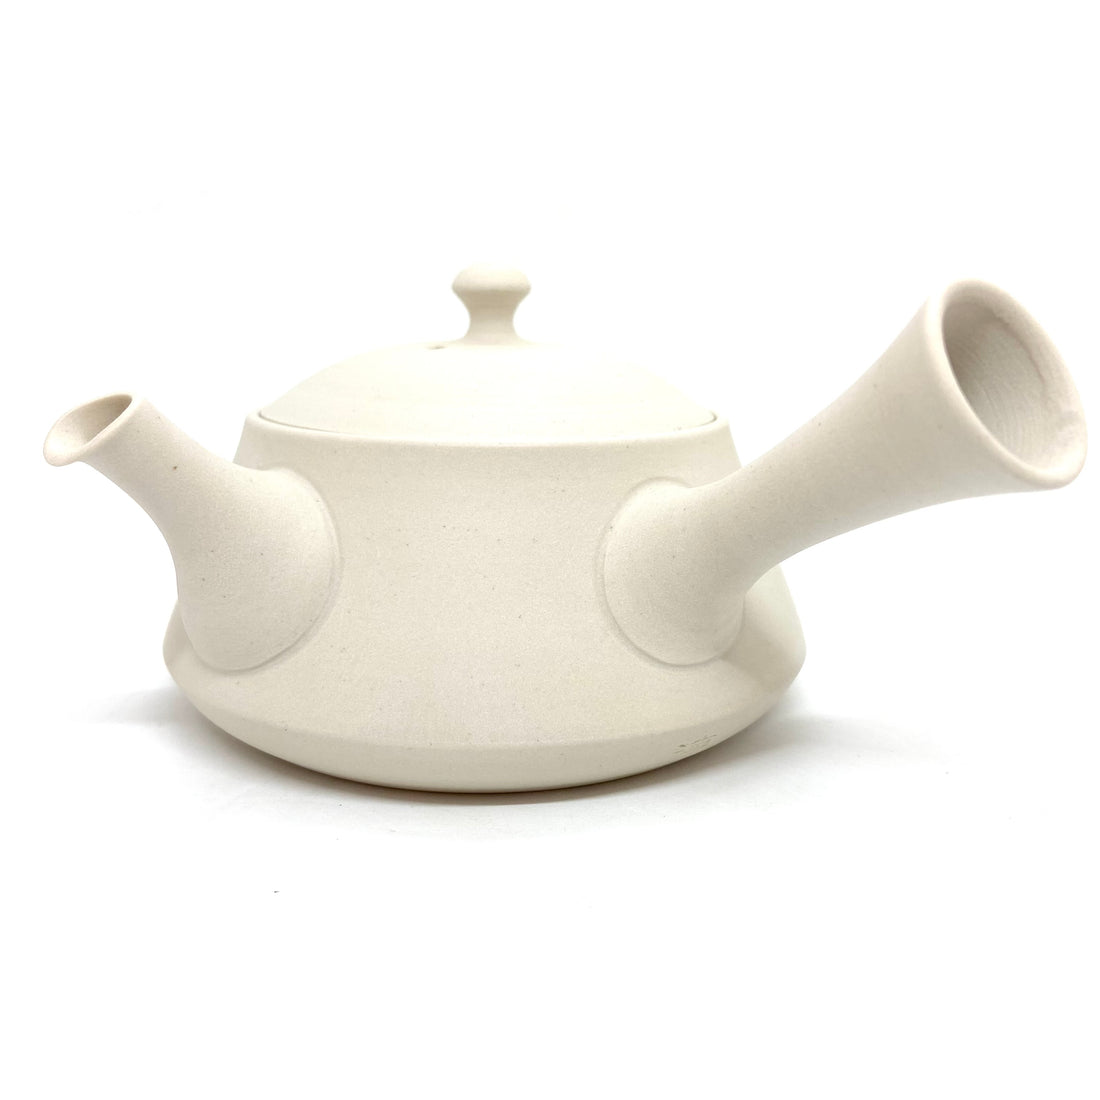 Kyusu Japanese Teapot - White Clay - Hira Sankaku - 250ml - #5